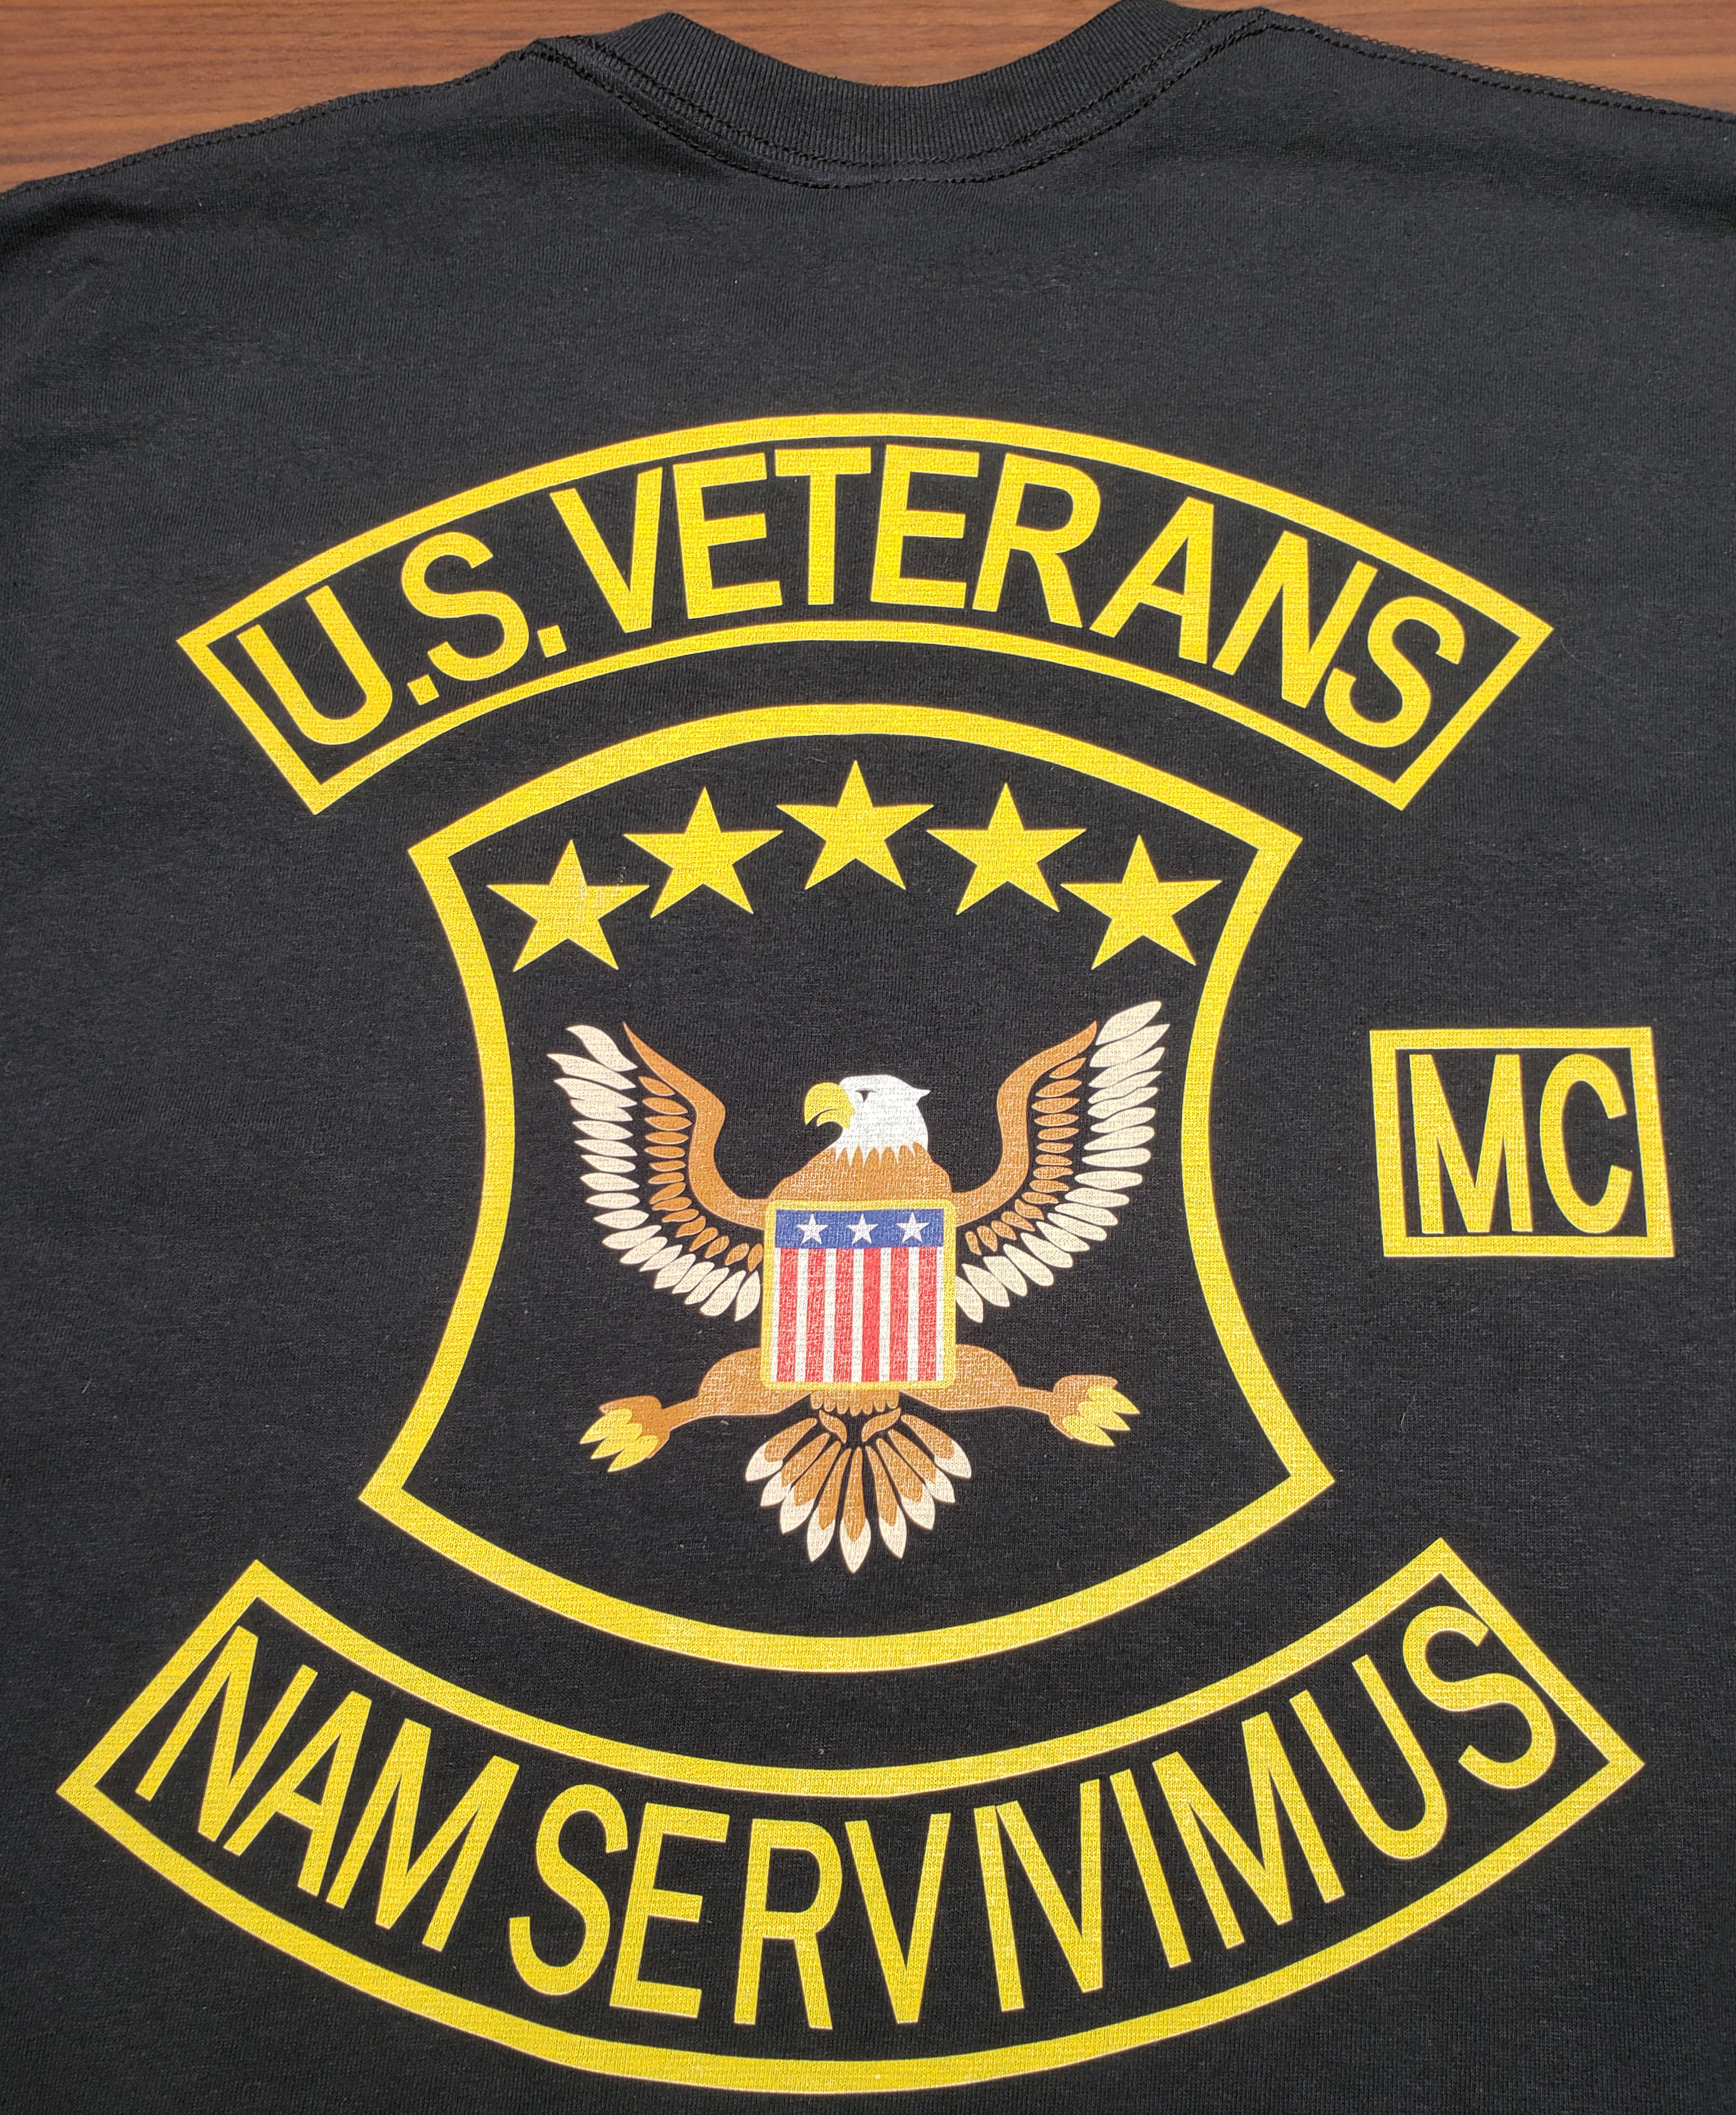 US Veterans MC Short Sleeve Reflective T-Shirt (Size: 5X-Large, Color: Black, USVMC Lower Rocker Options: Marines)